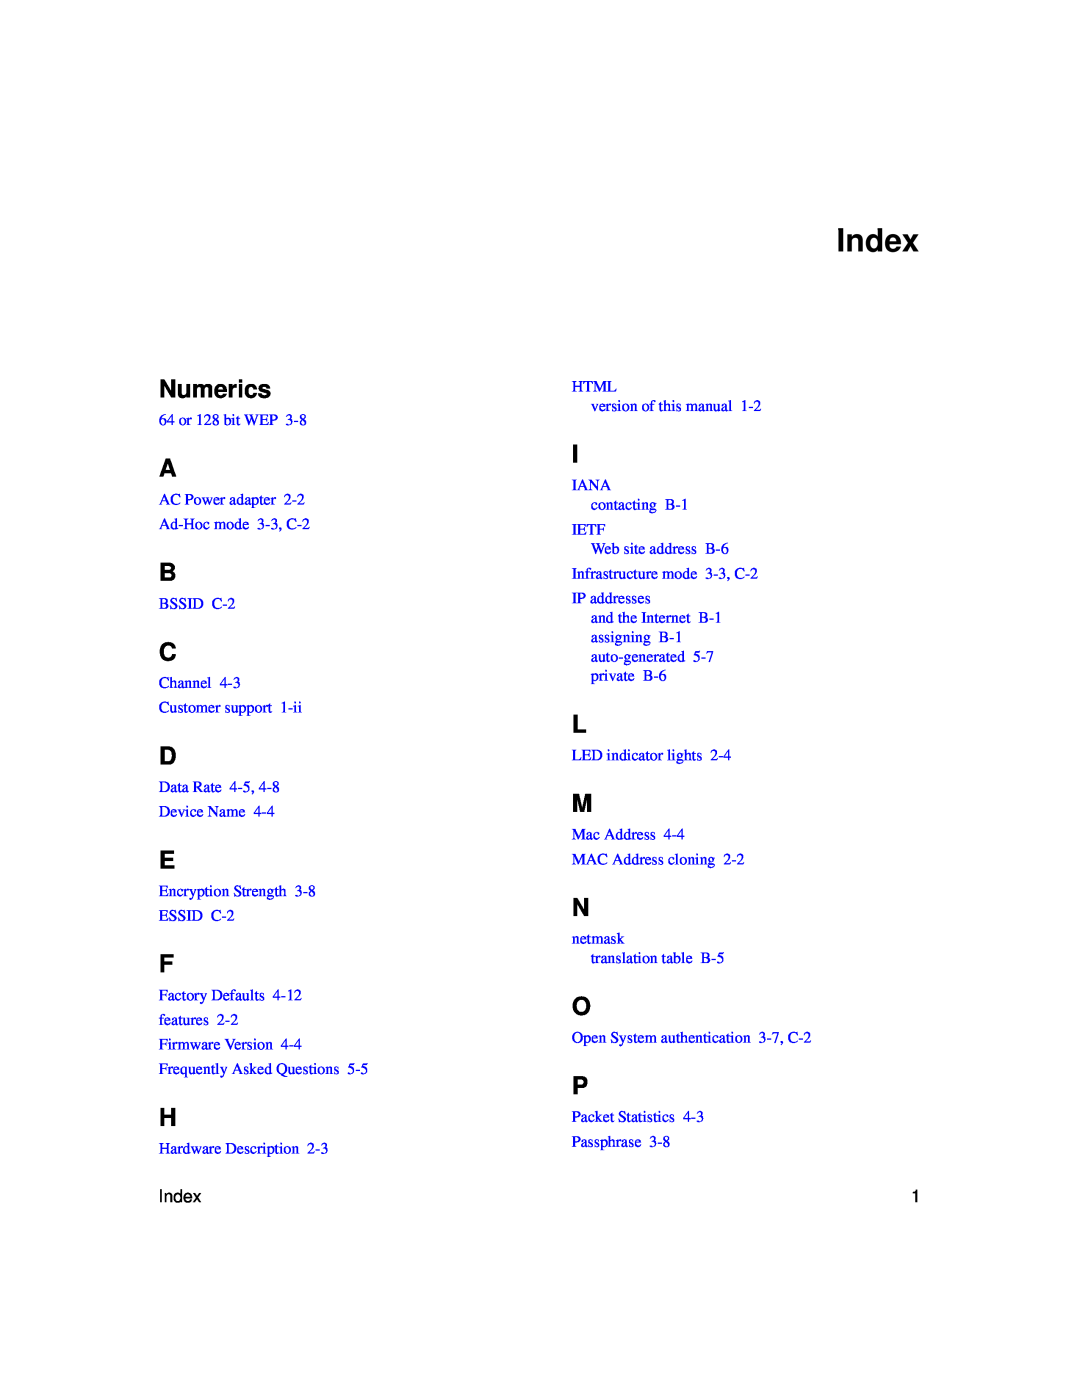 NETGEAR WGE111 user manual Index, Numerics 